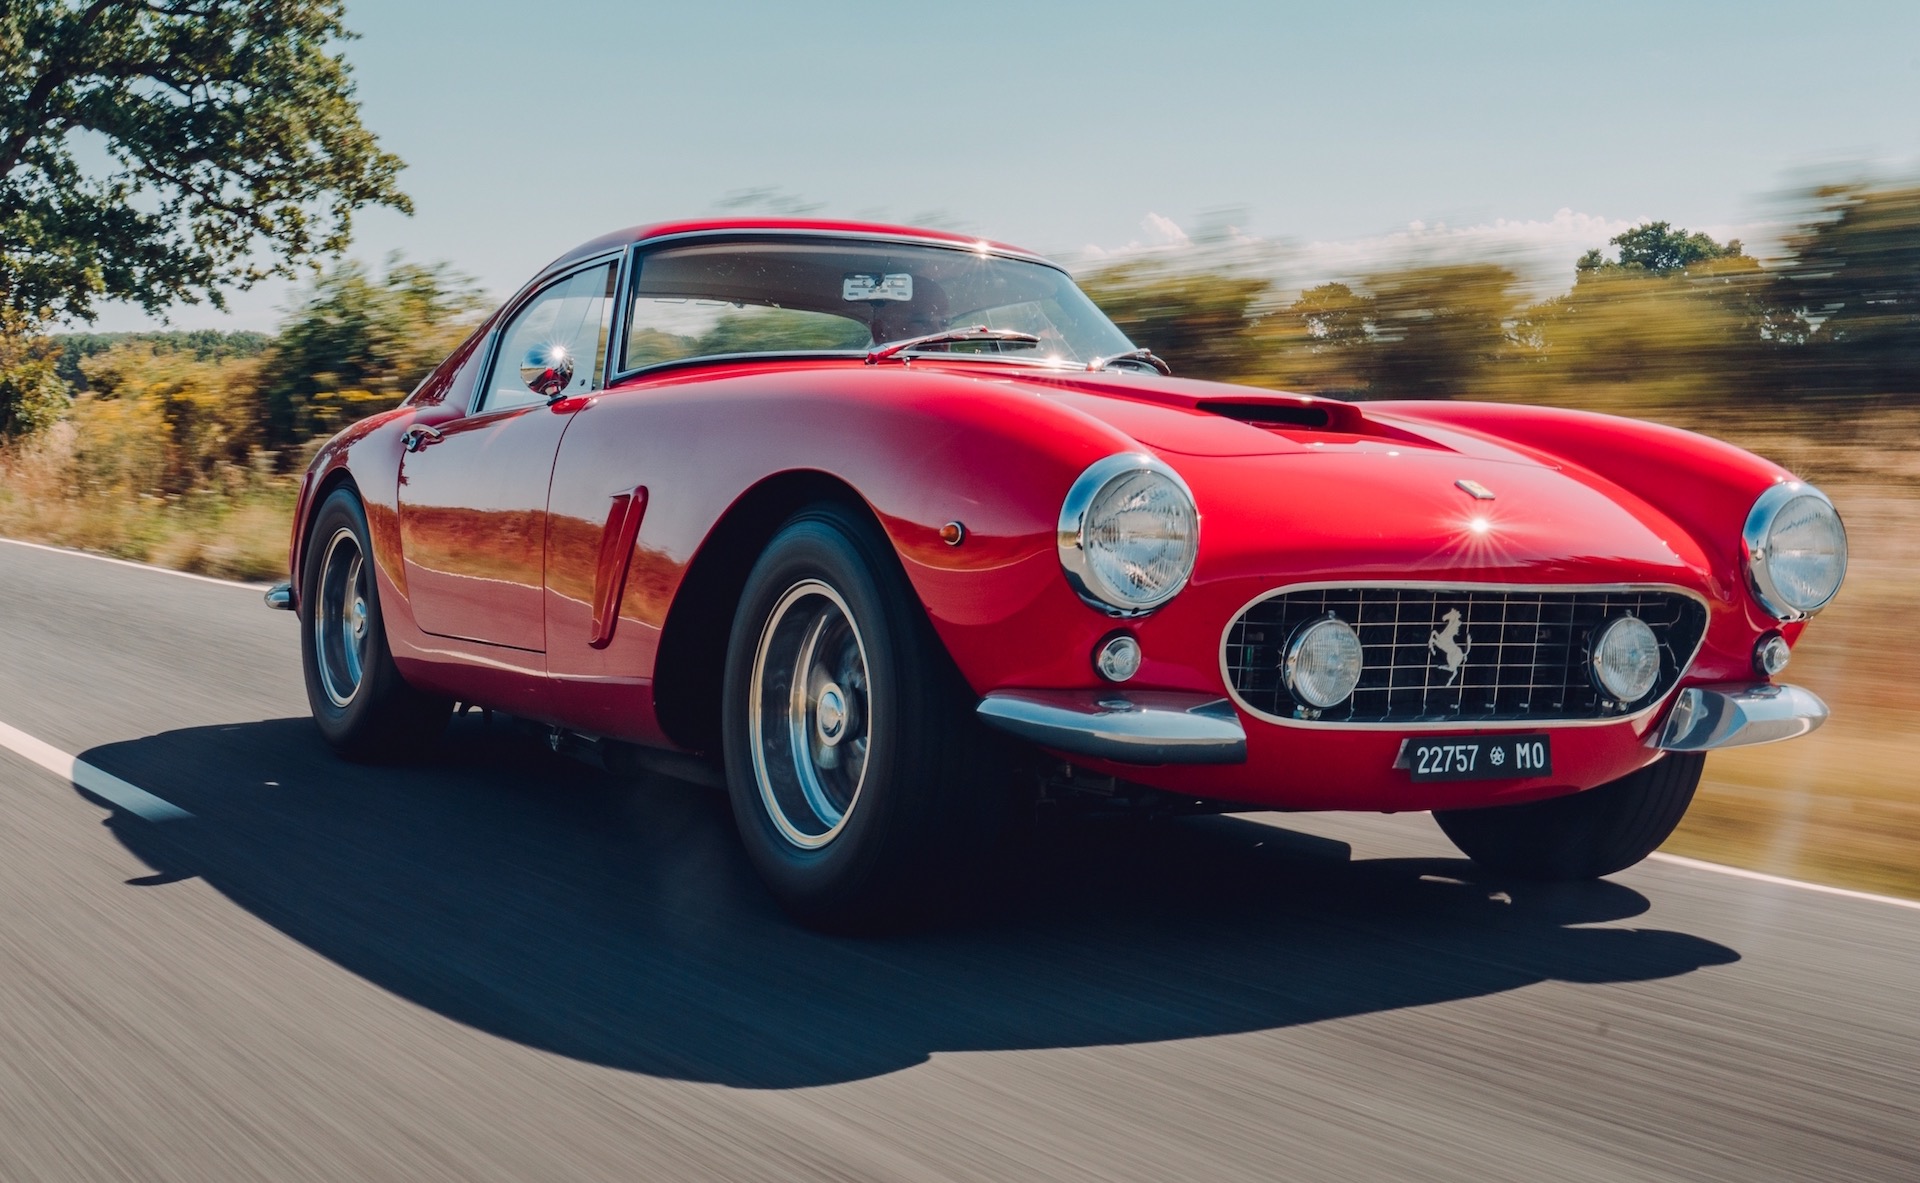 GTO Engineering offers Ferrari ‘250 SWB Revival’ custom builds